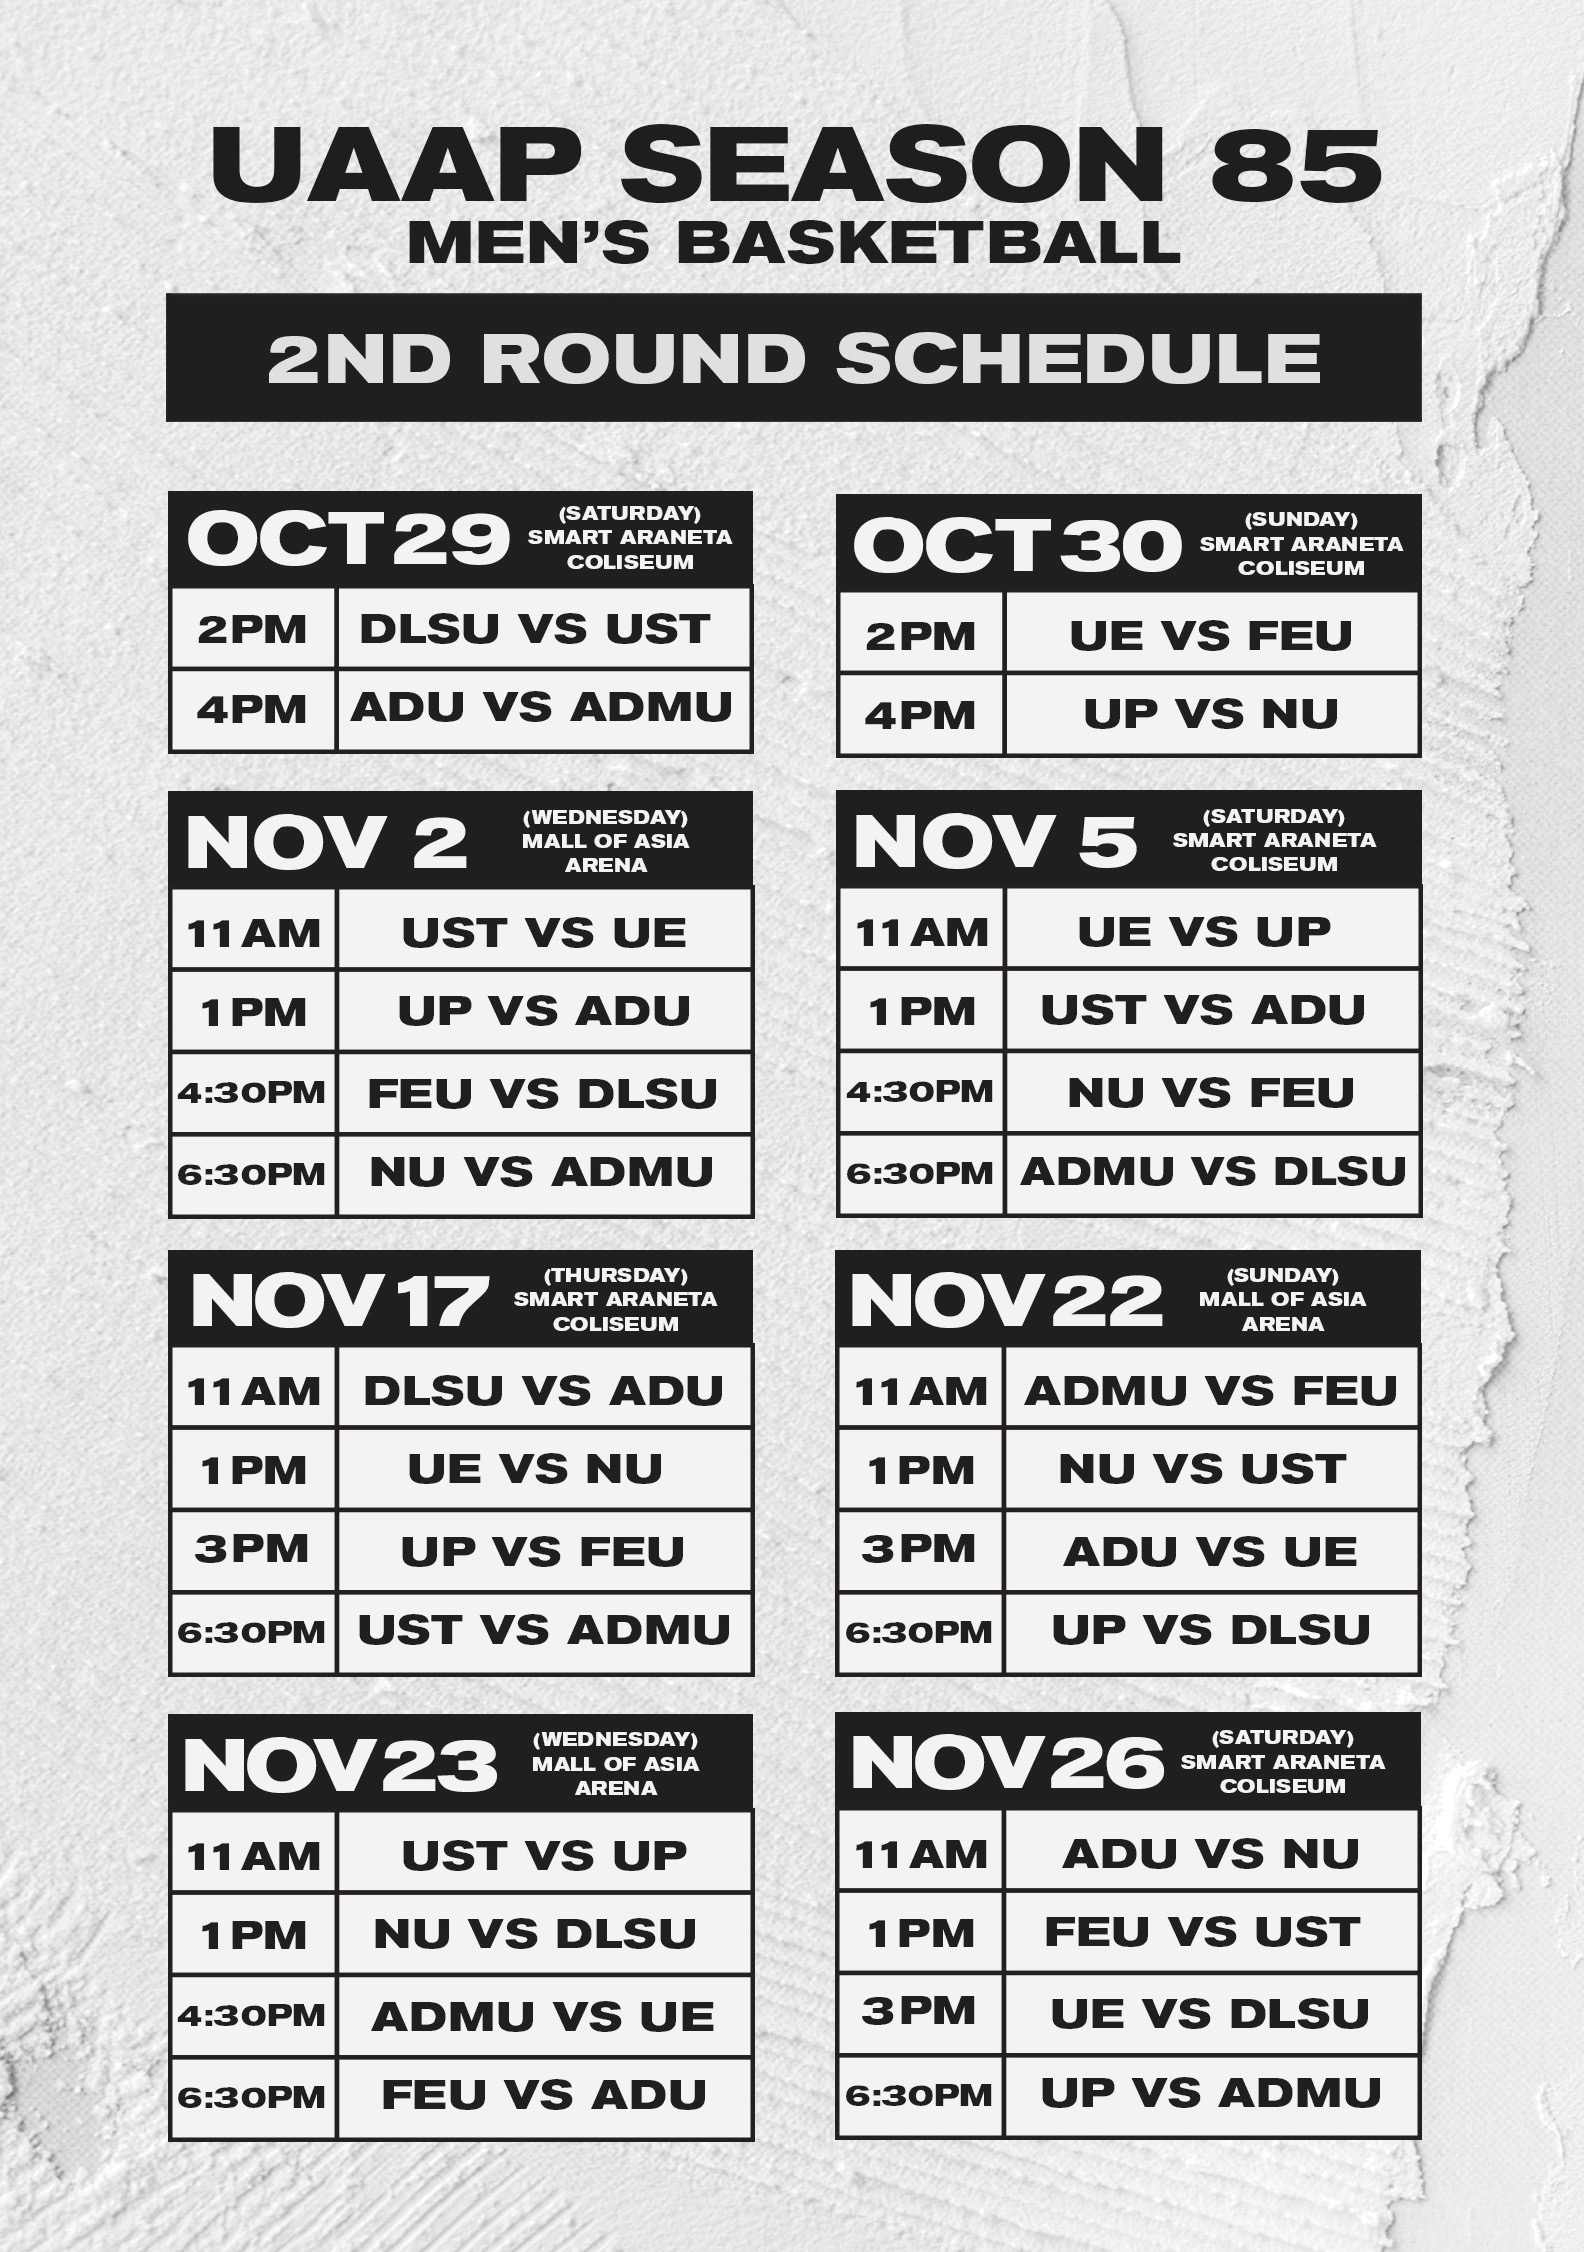 UAAP Season 85 men’s basketball second round schedule